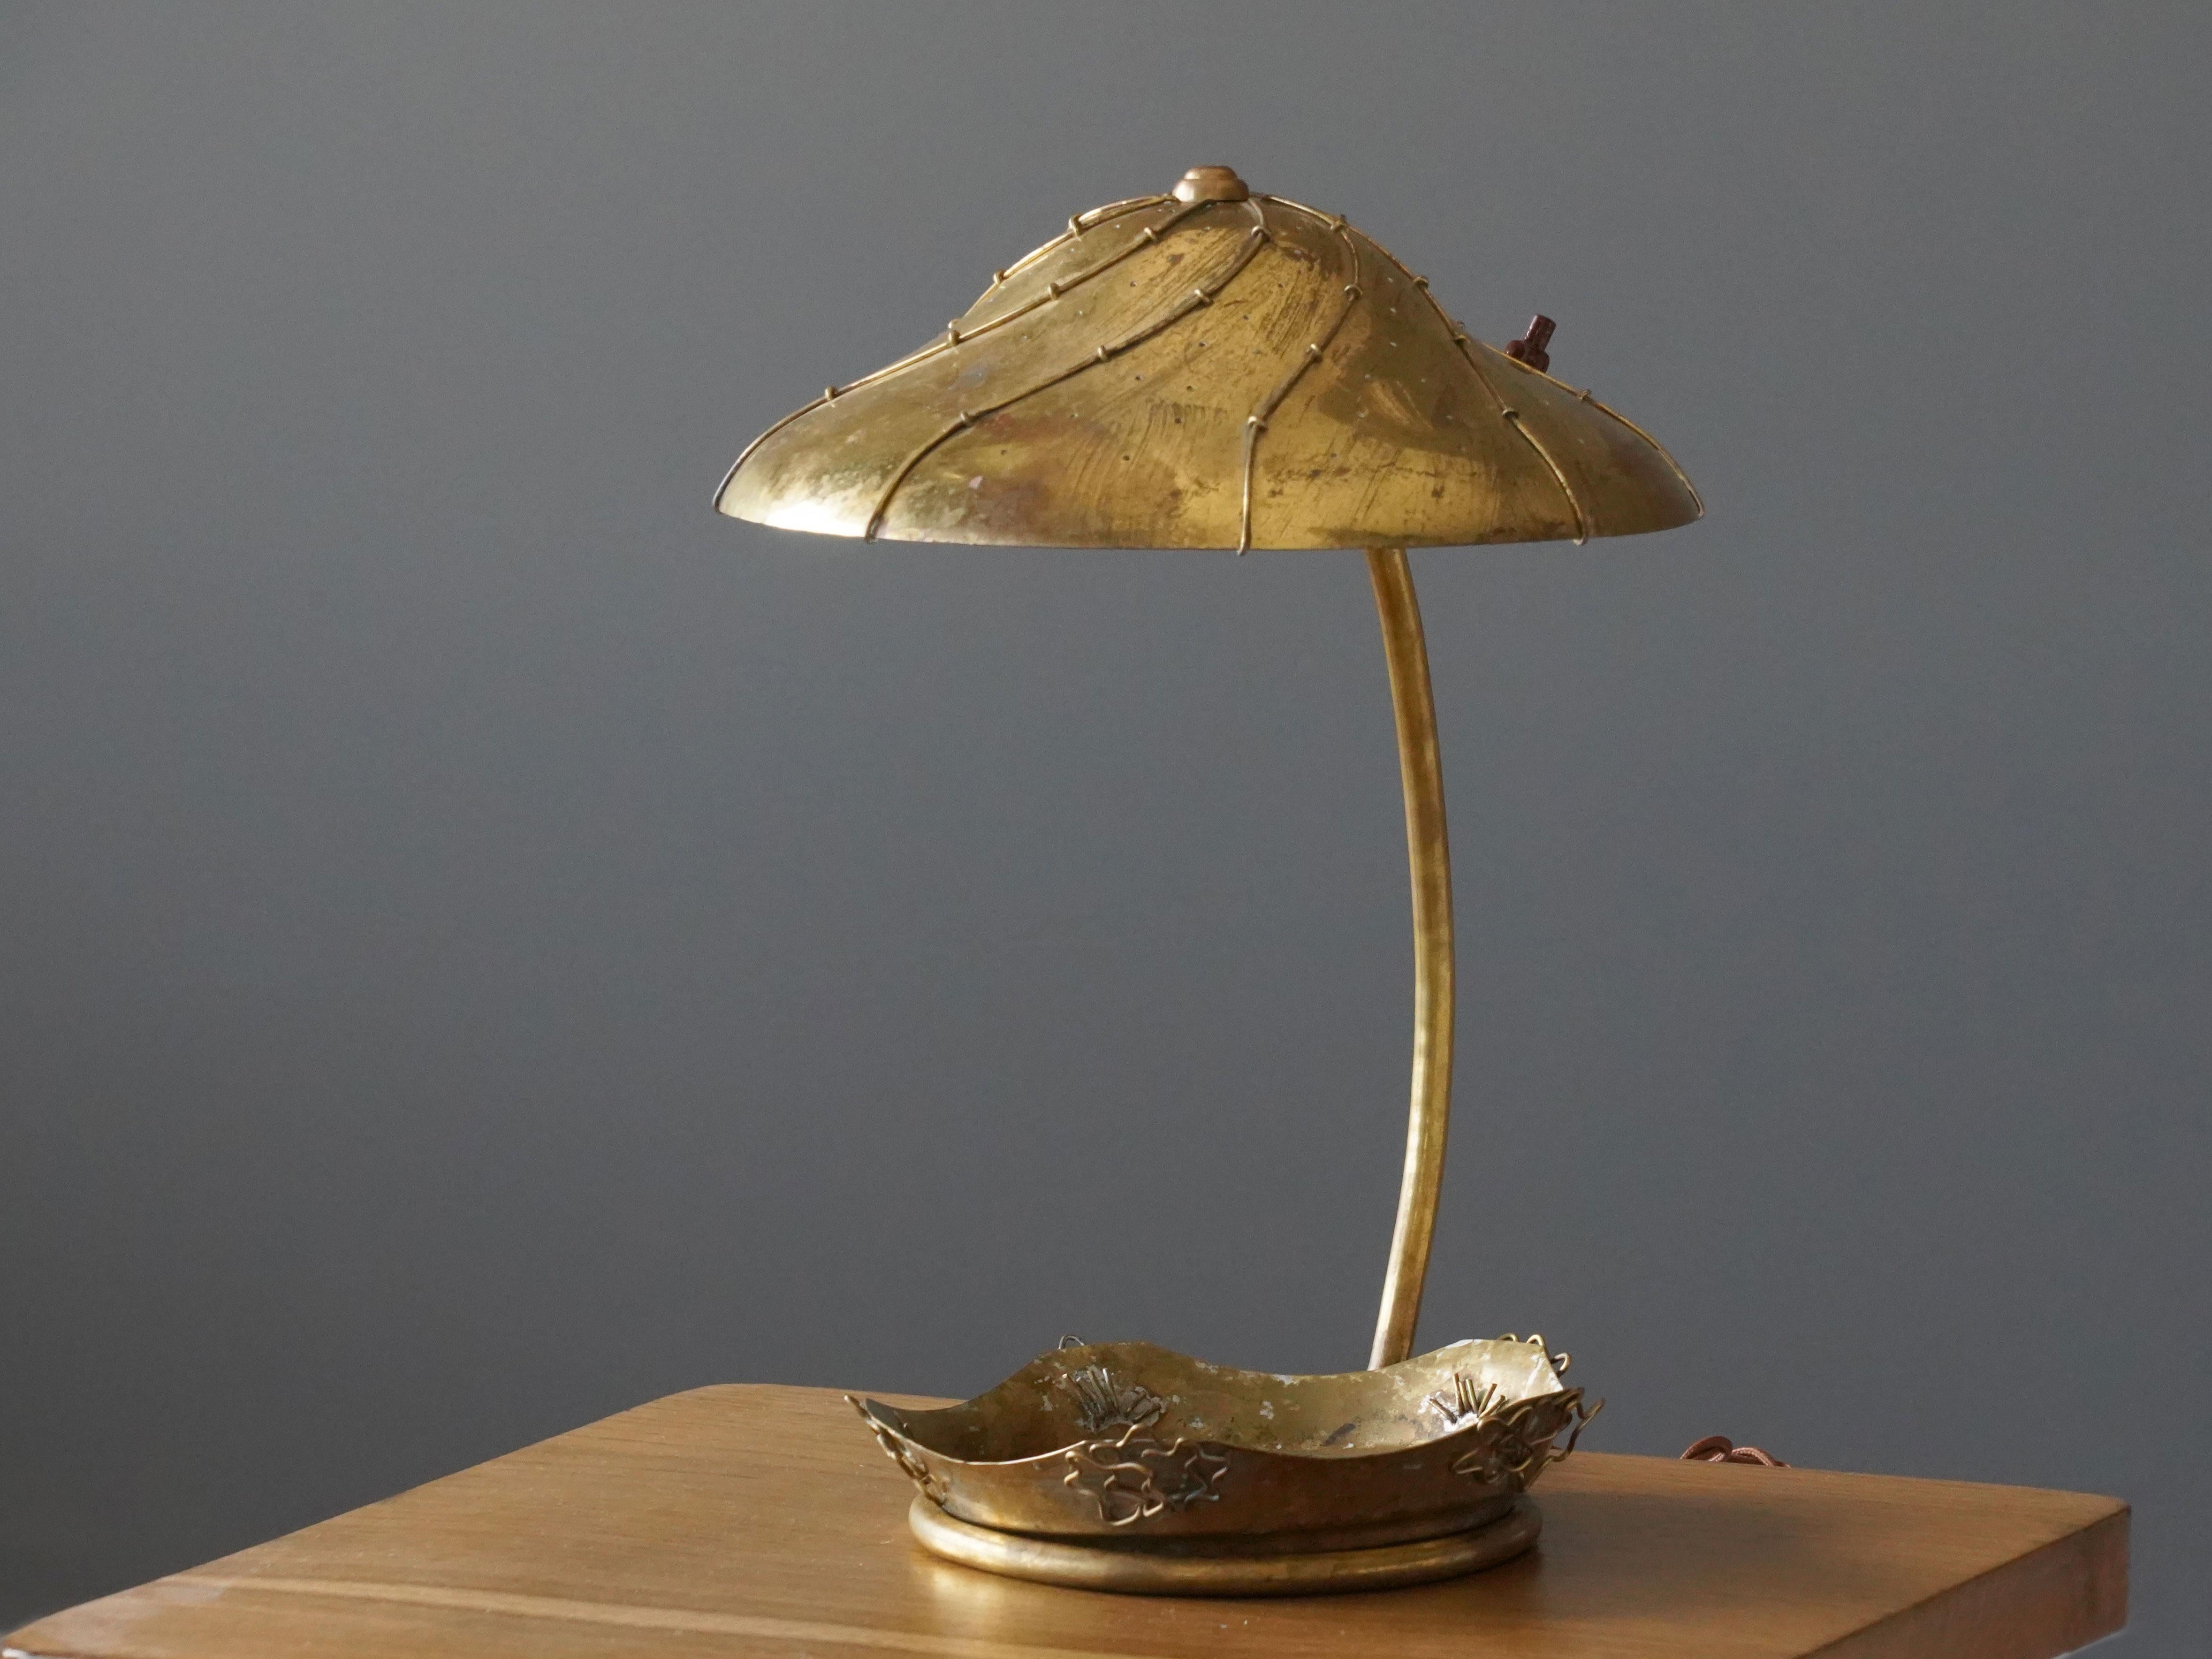 Scandinavian Modern Finnish Modernist Designer, Table / Desk Lamp W Small Tray, Brass, Finland 1930s